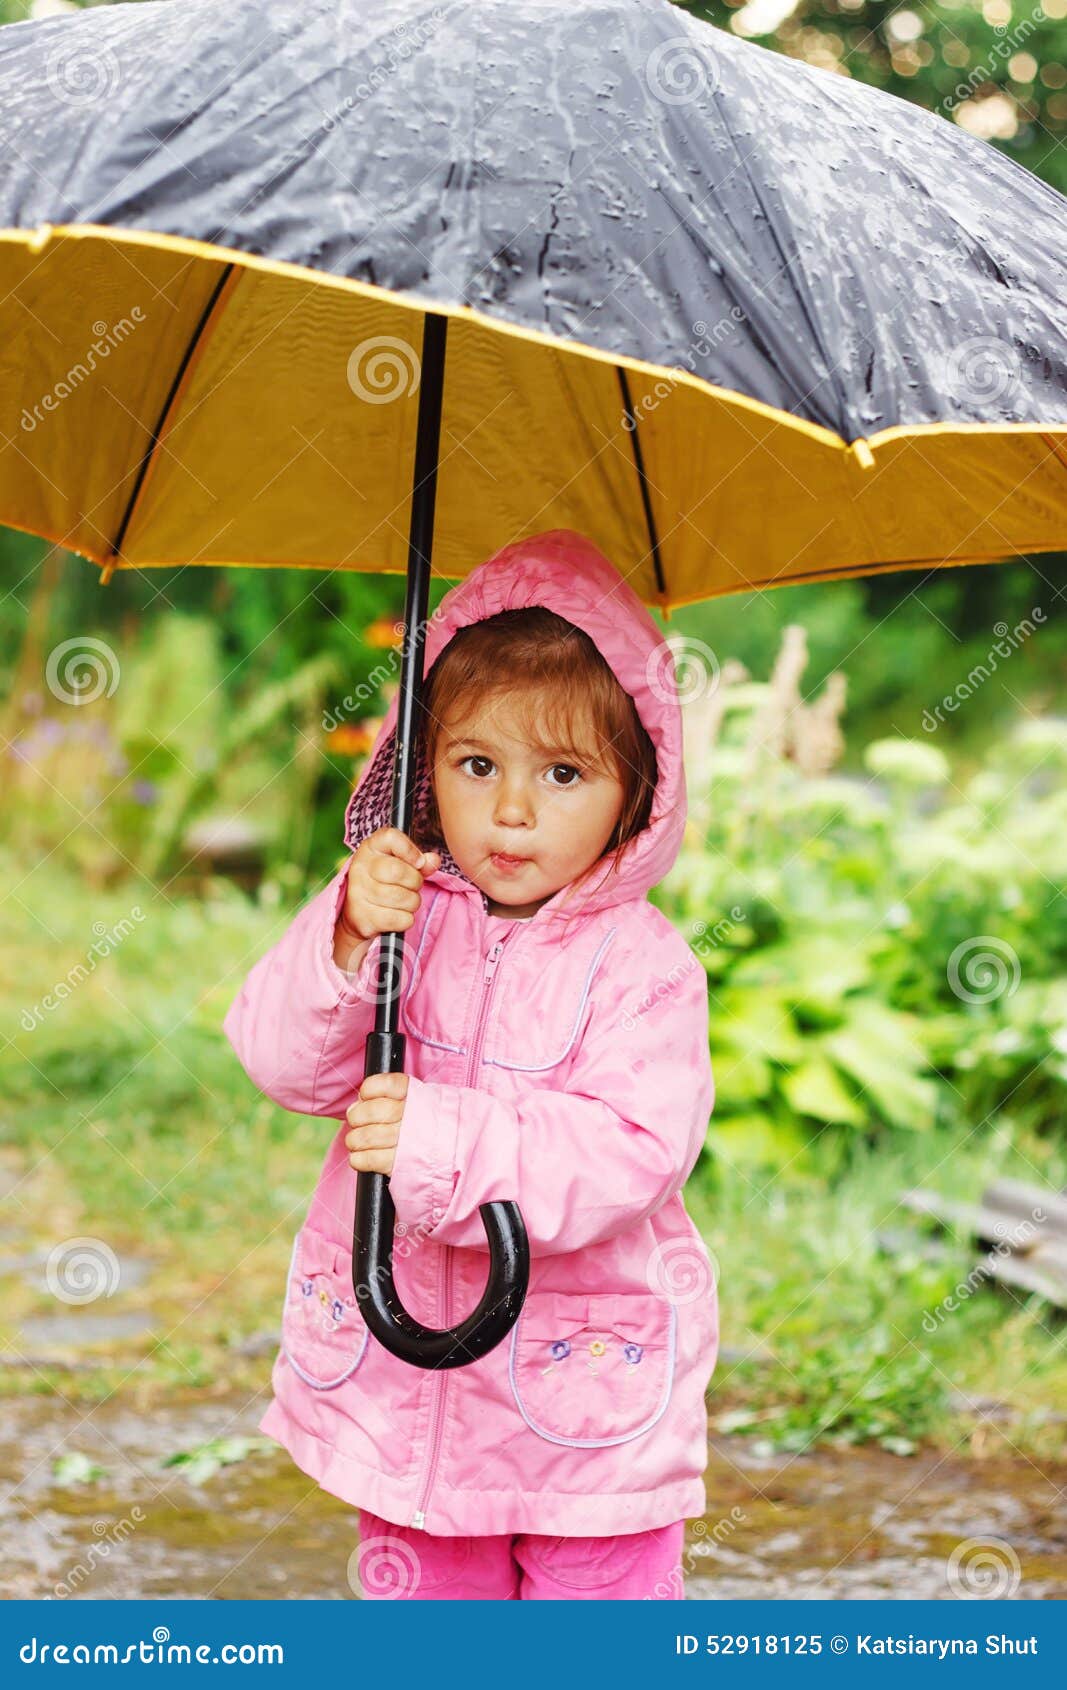 You take an umbrella today. Девочка держит зонтик. Ребенок держит зонт. Take an Umbrella. Дети под зонтиком от солнца Китай.